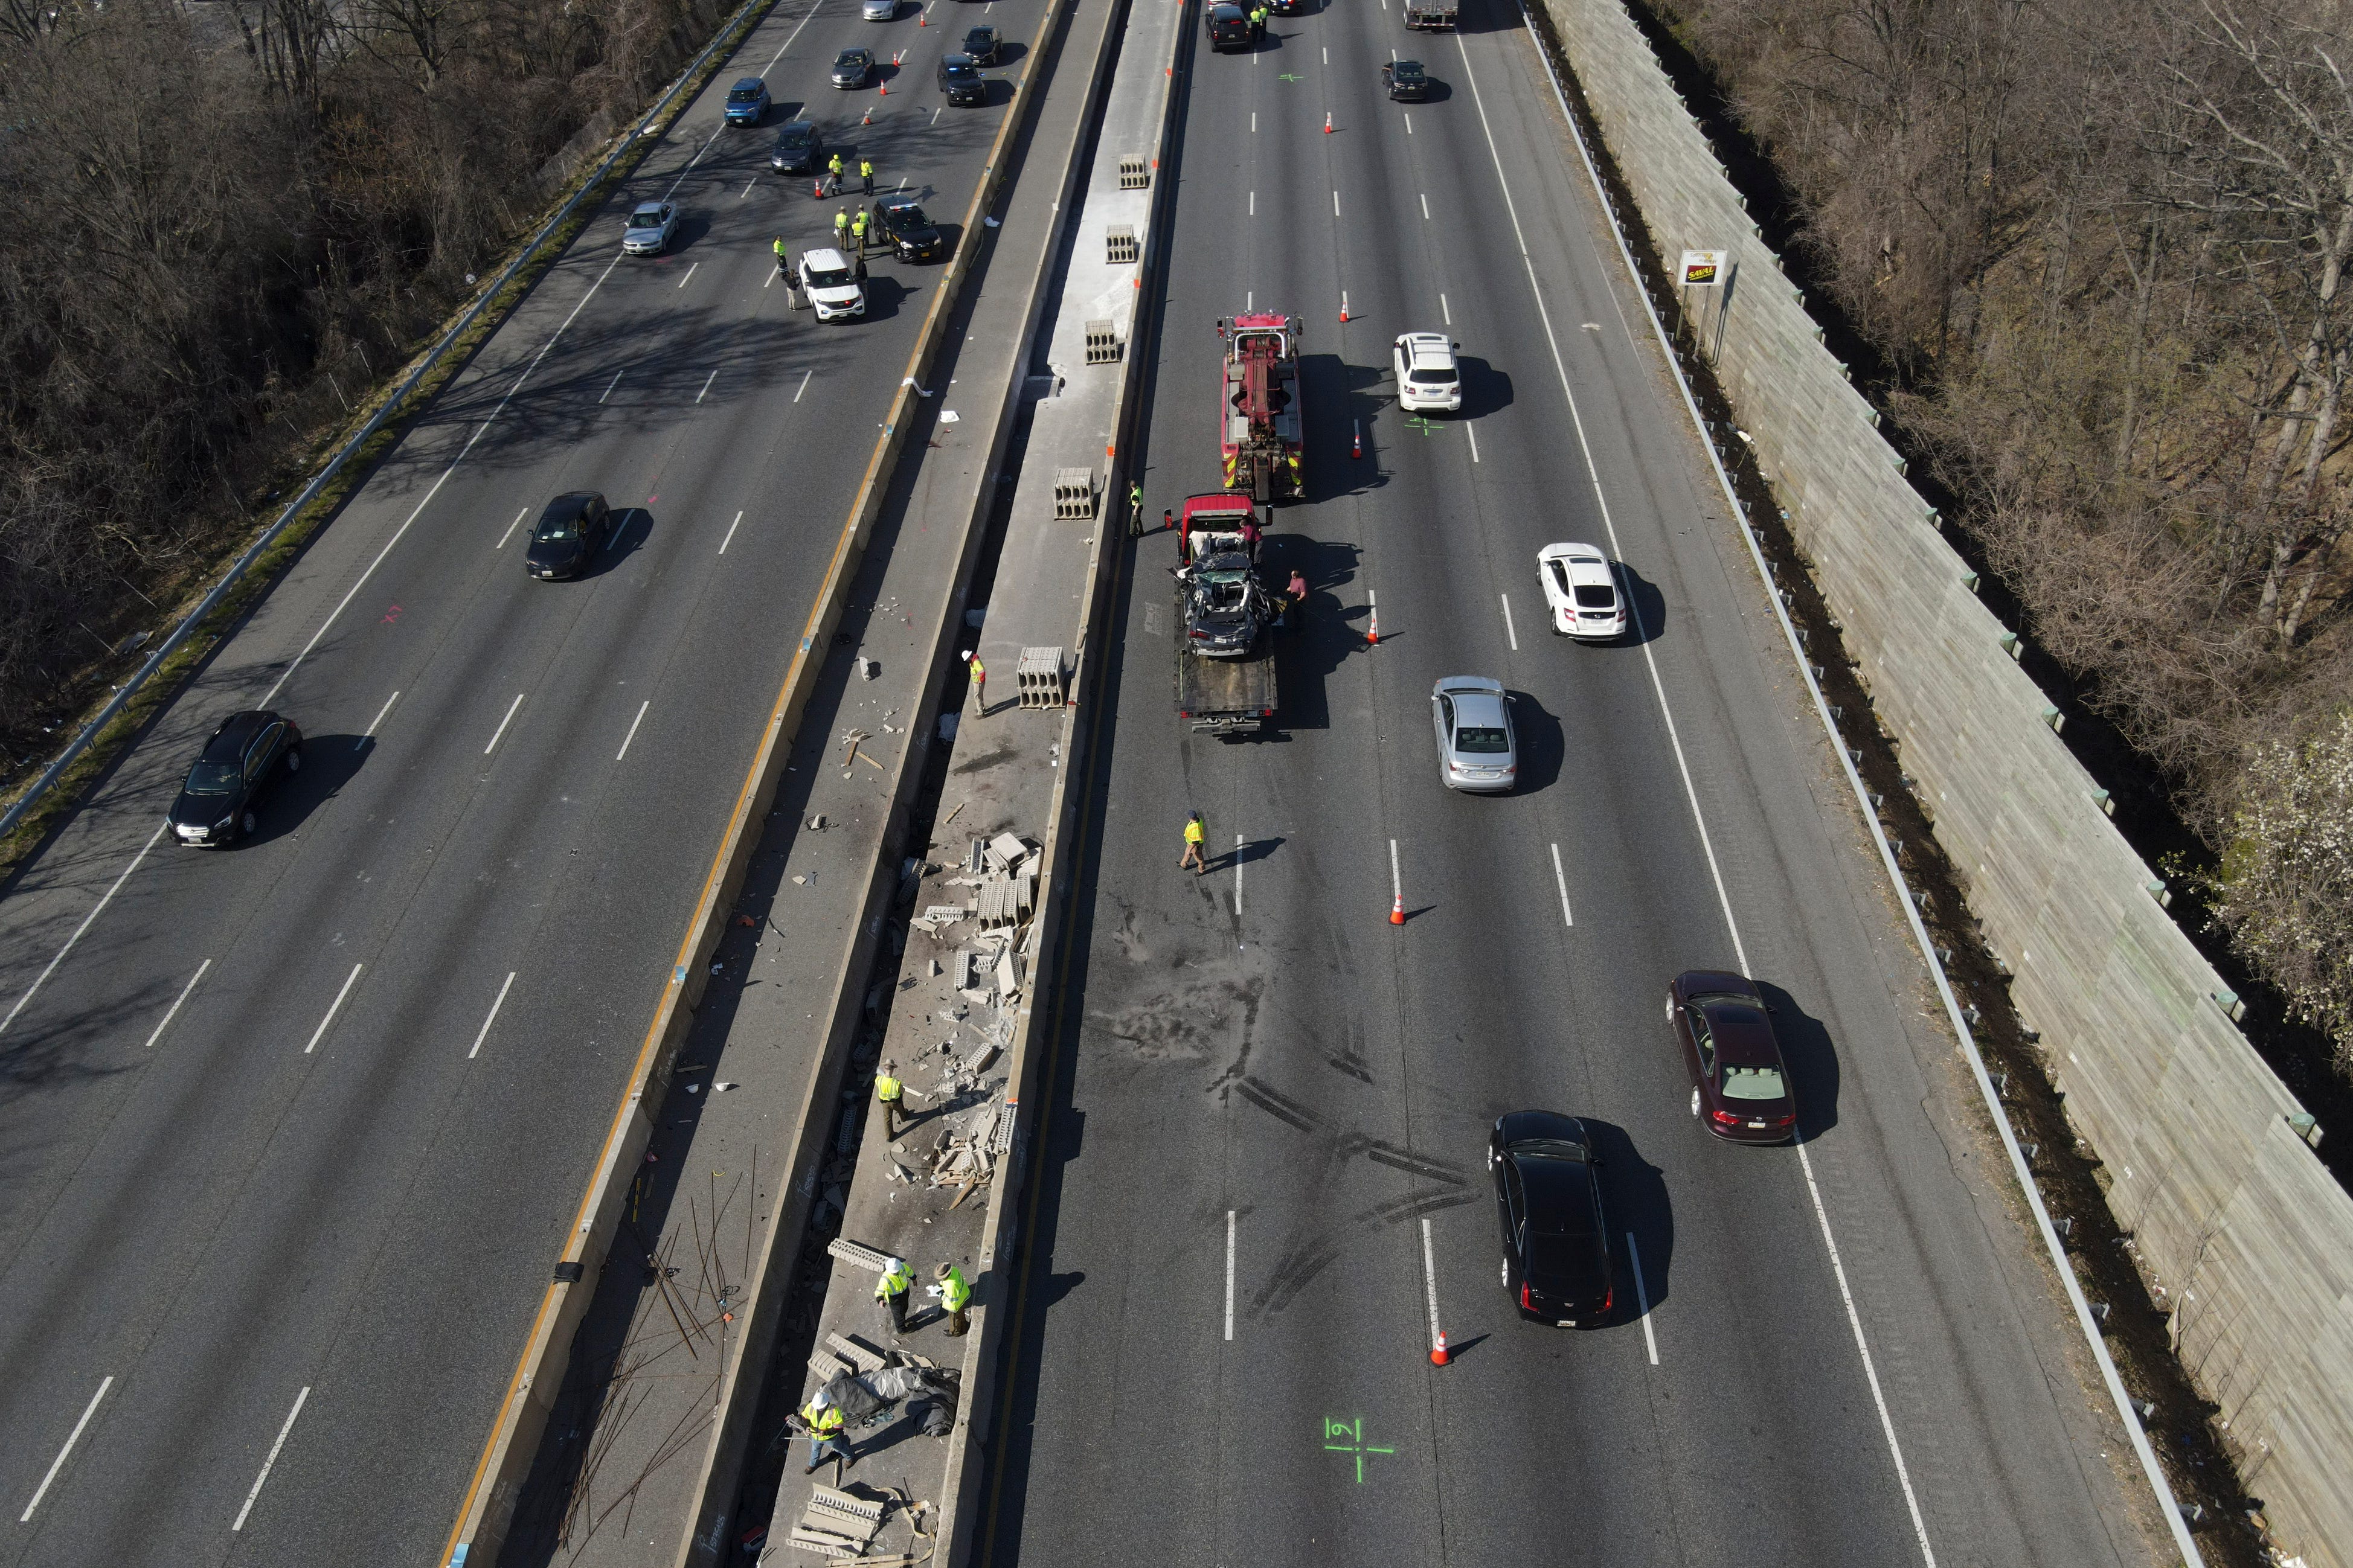 6 highway workers die after crash in I-695 Maryland work zone: Police